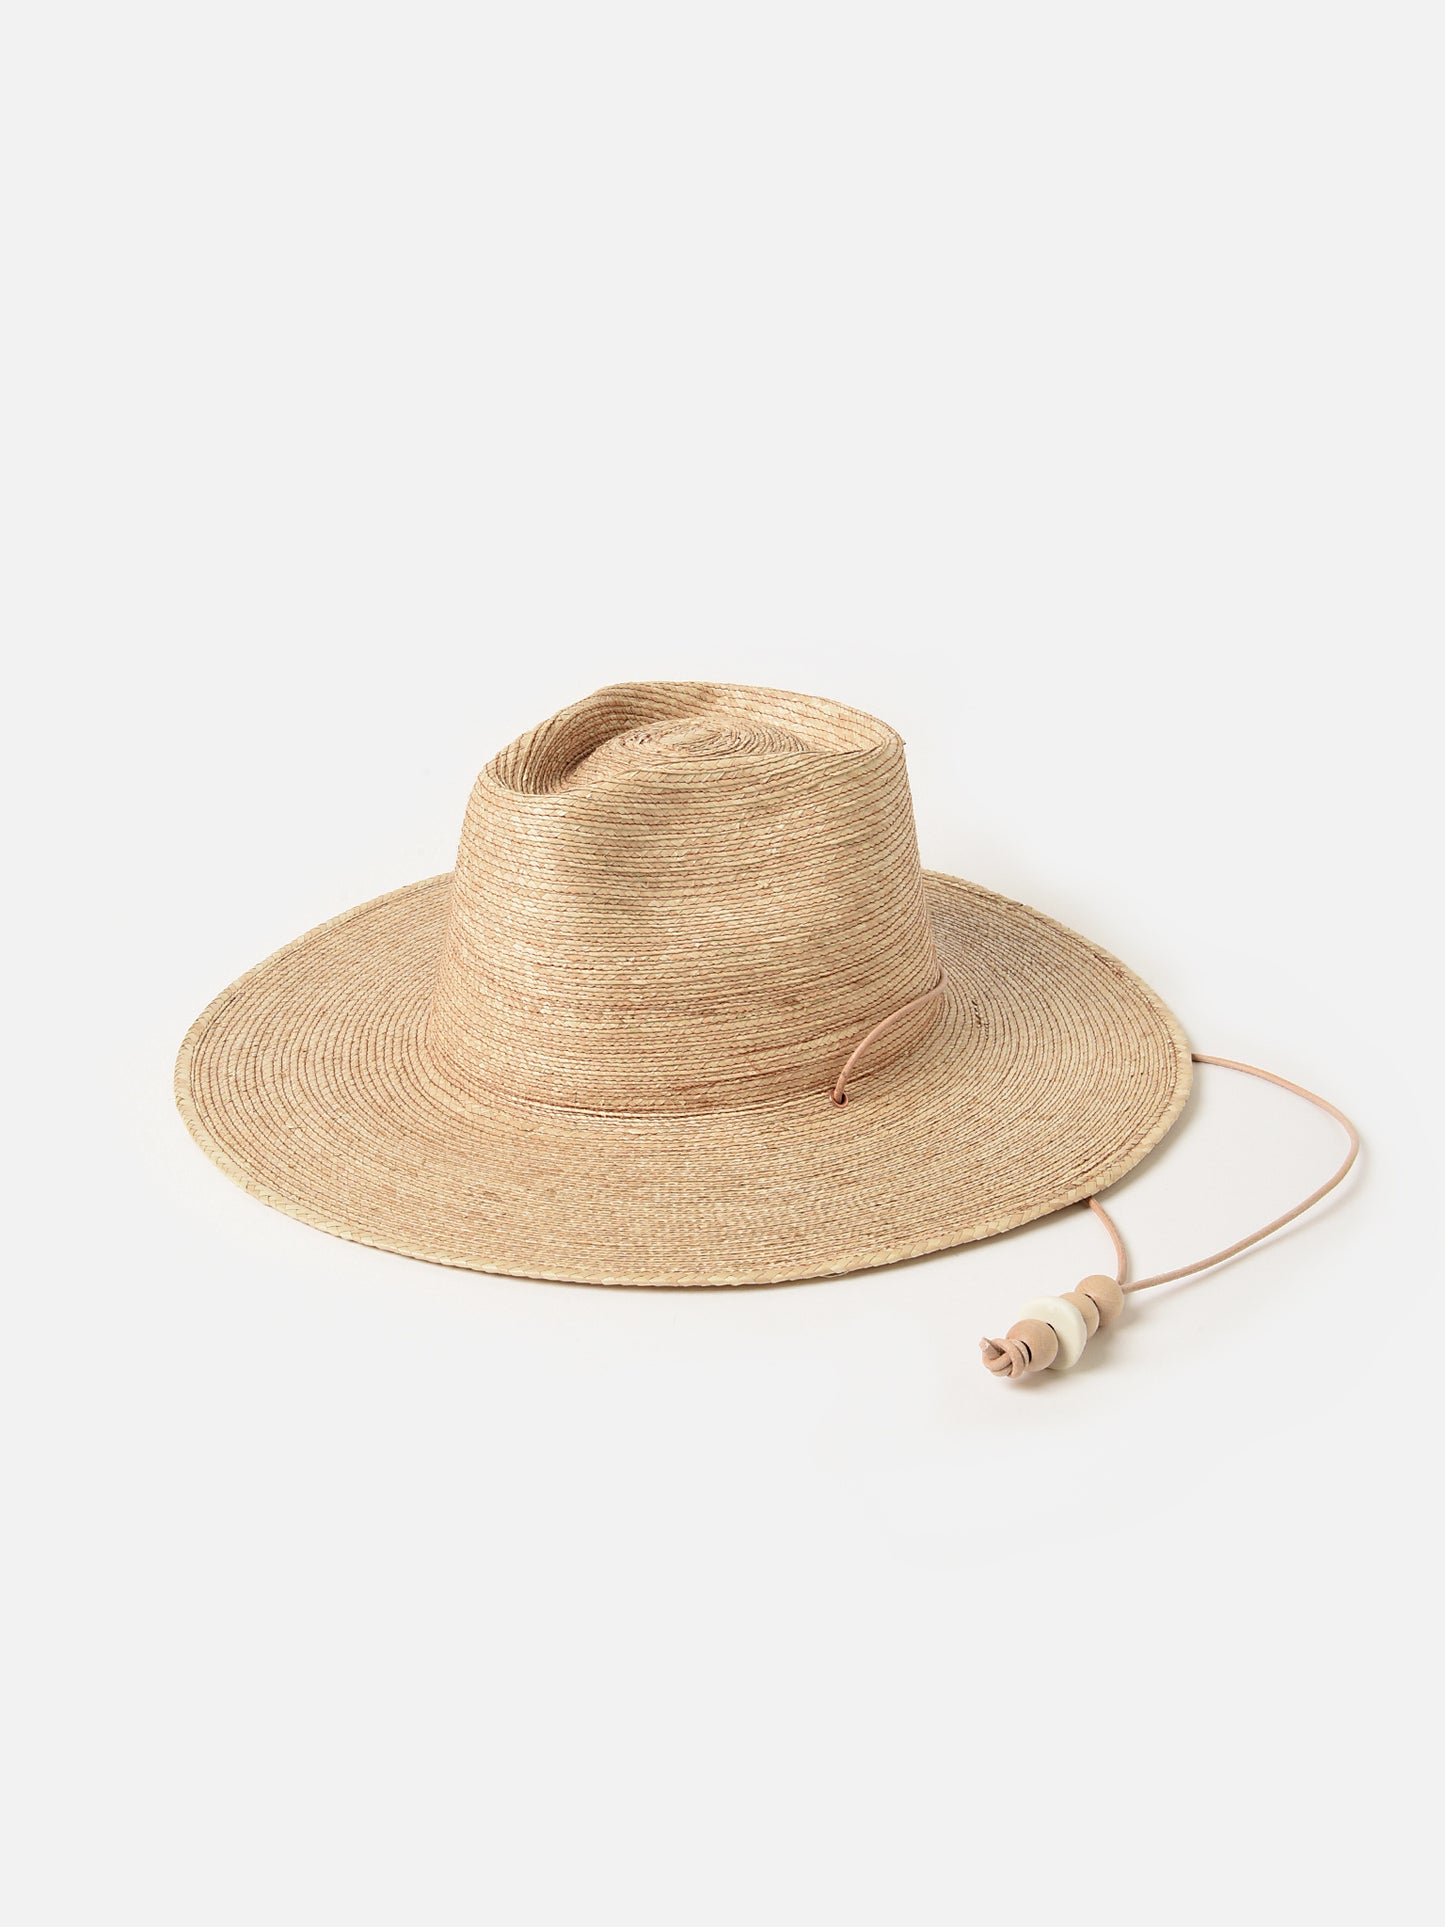 West Perro Women's Desert Sun Hat